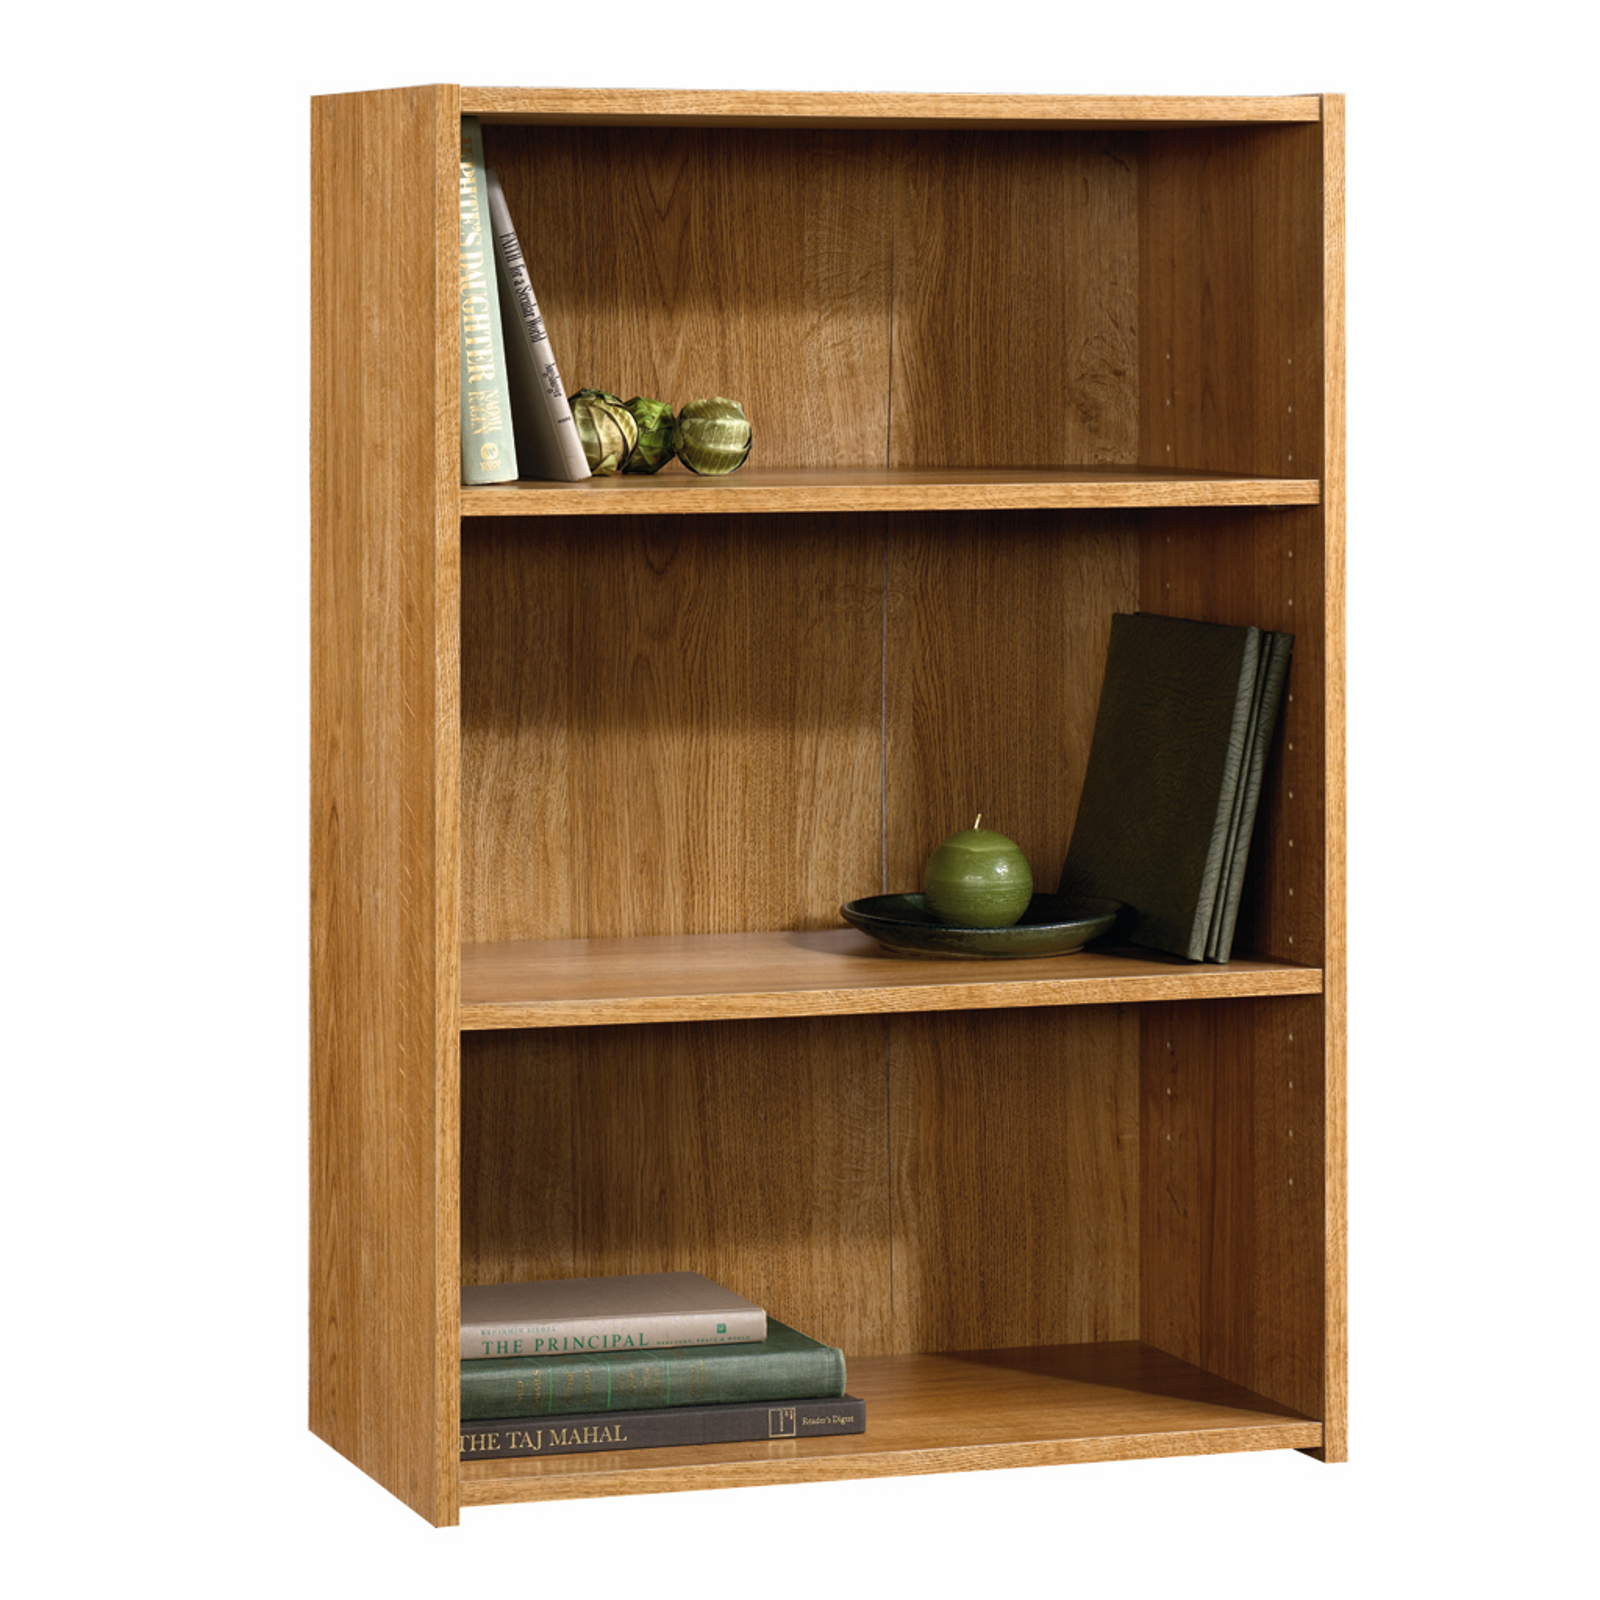 Shelf Wood Bookcase Oak Finish, Solid Wood Bookcases With Adjustable Shelves